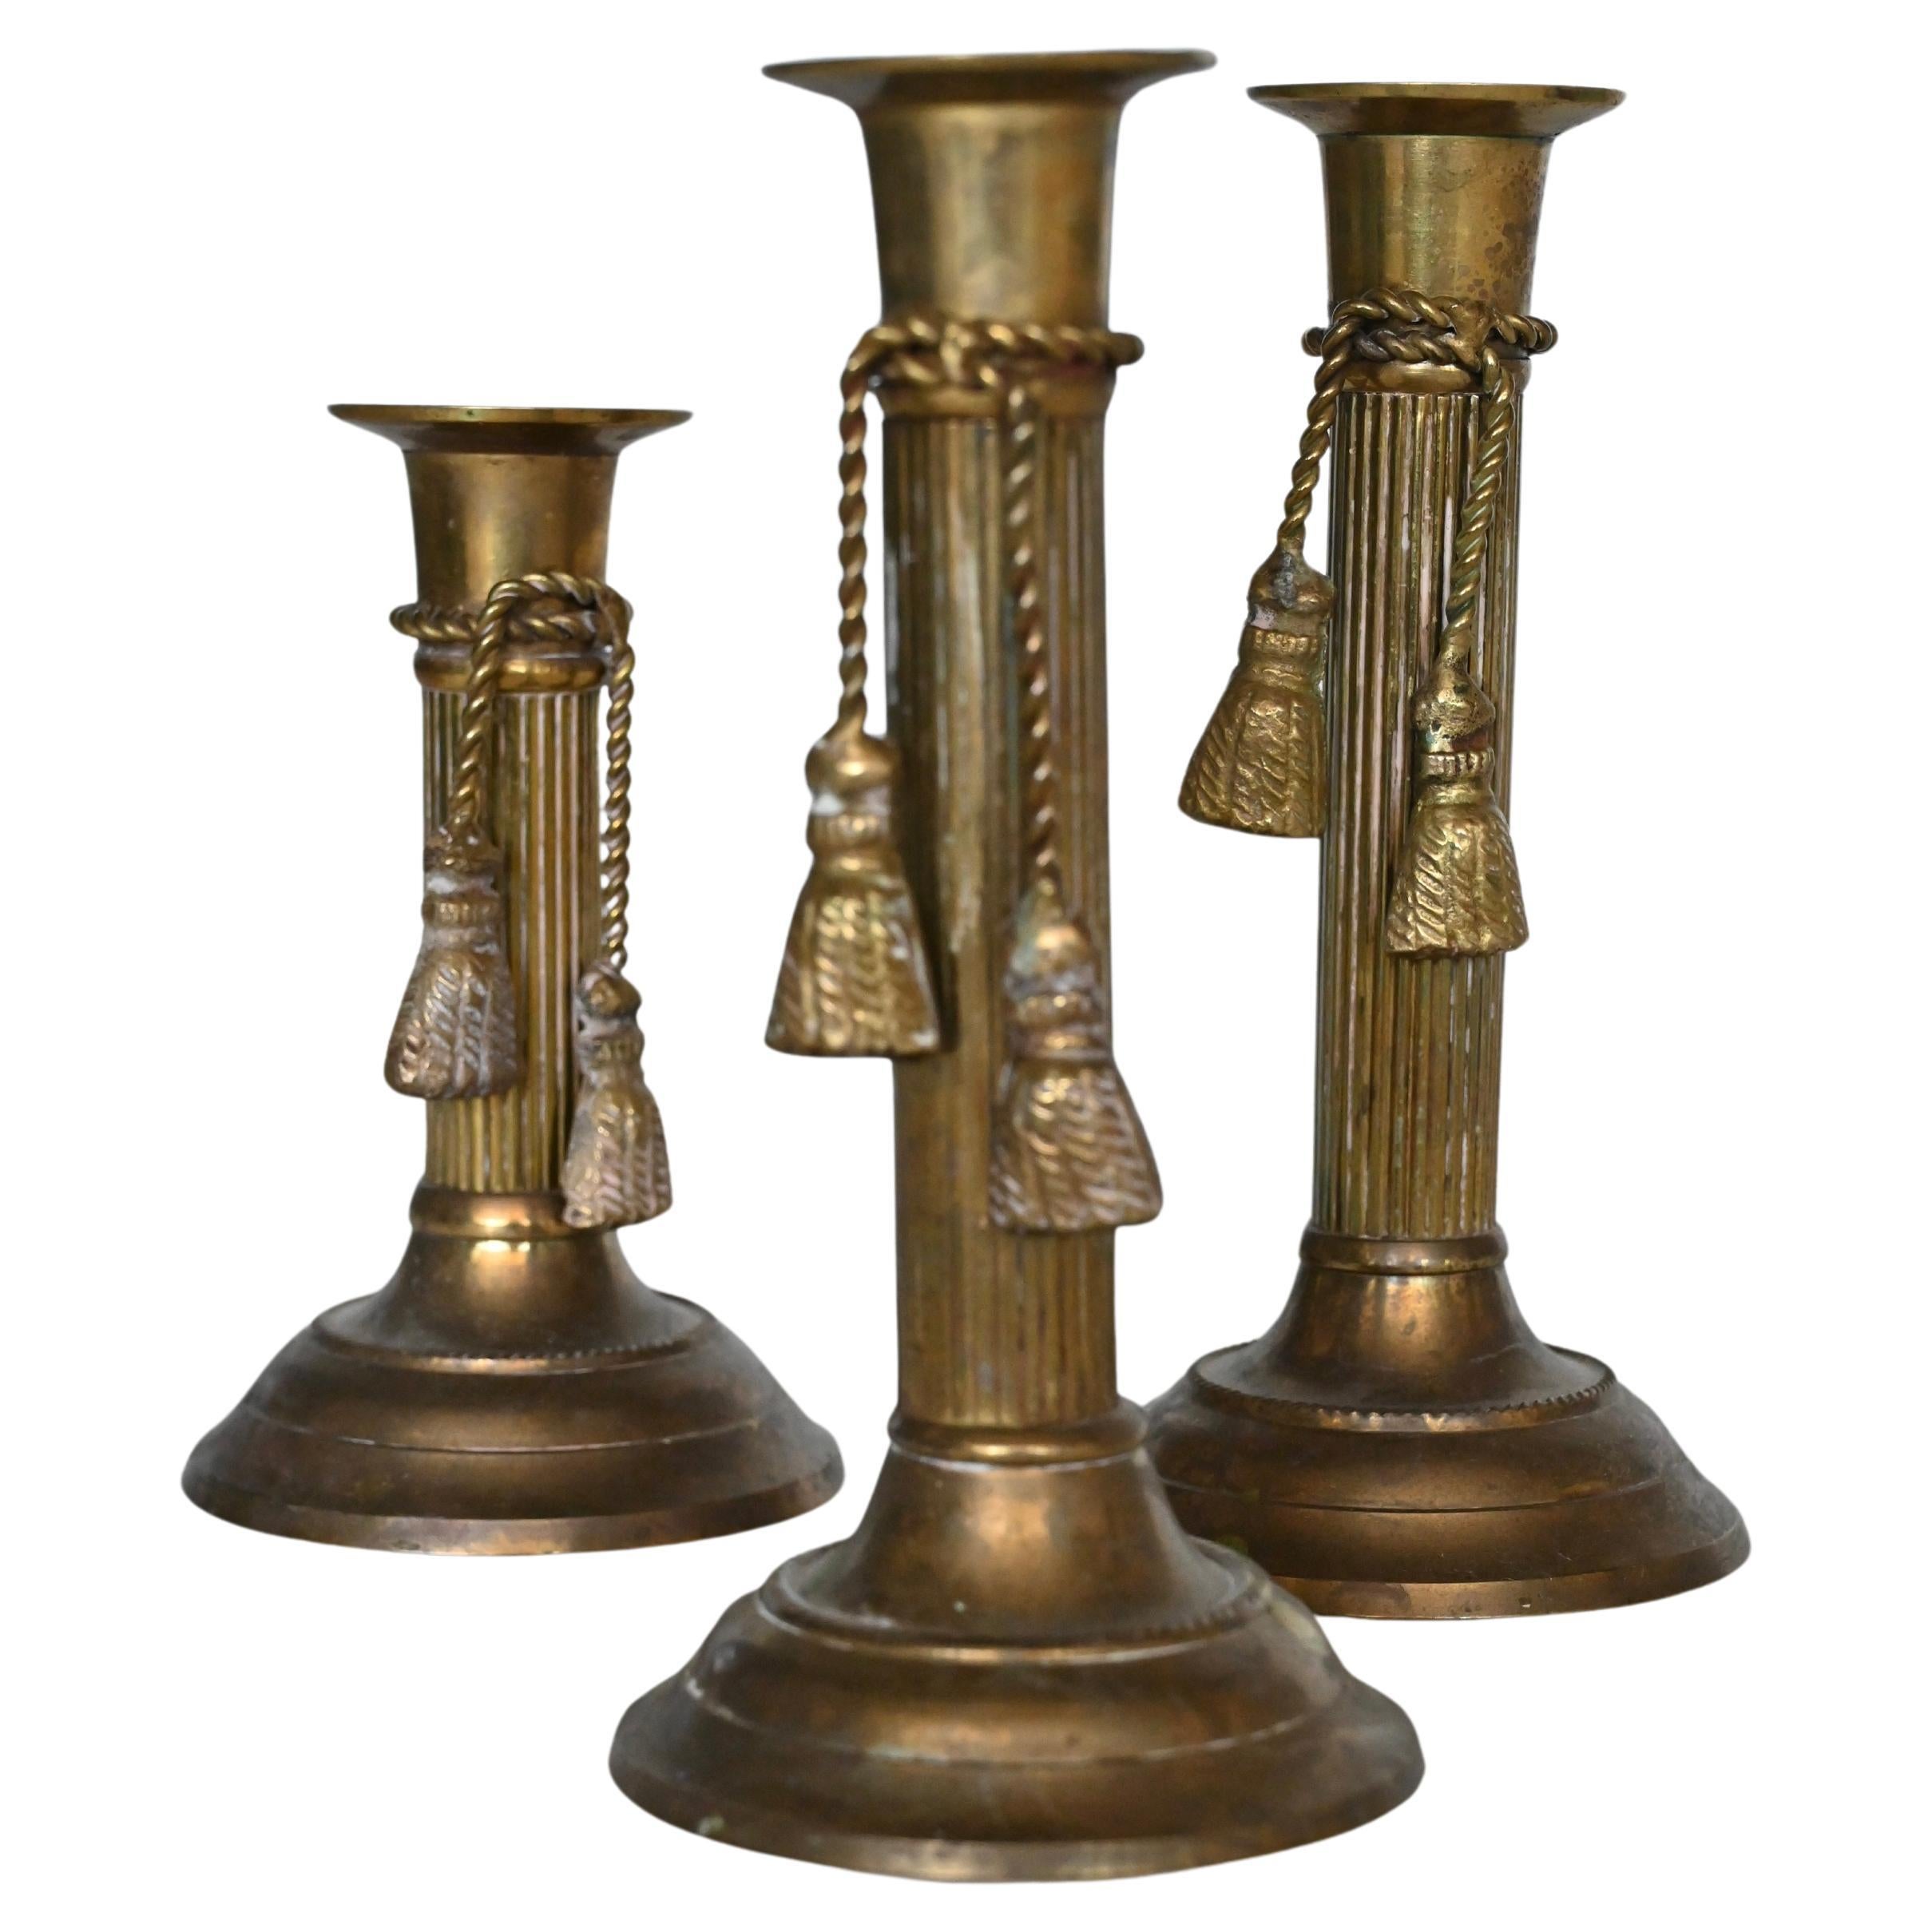 Set of three brass candlesticks with tassel detail, mid 20th century.